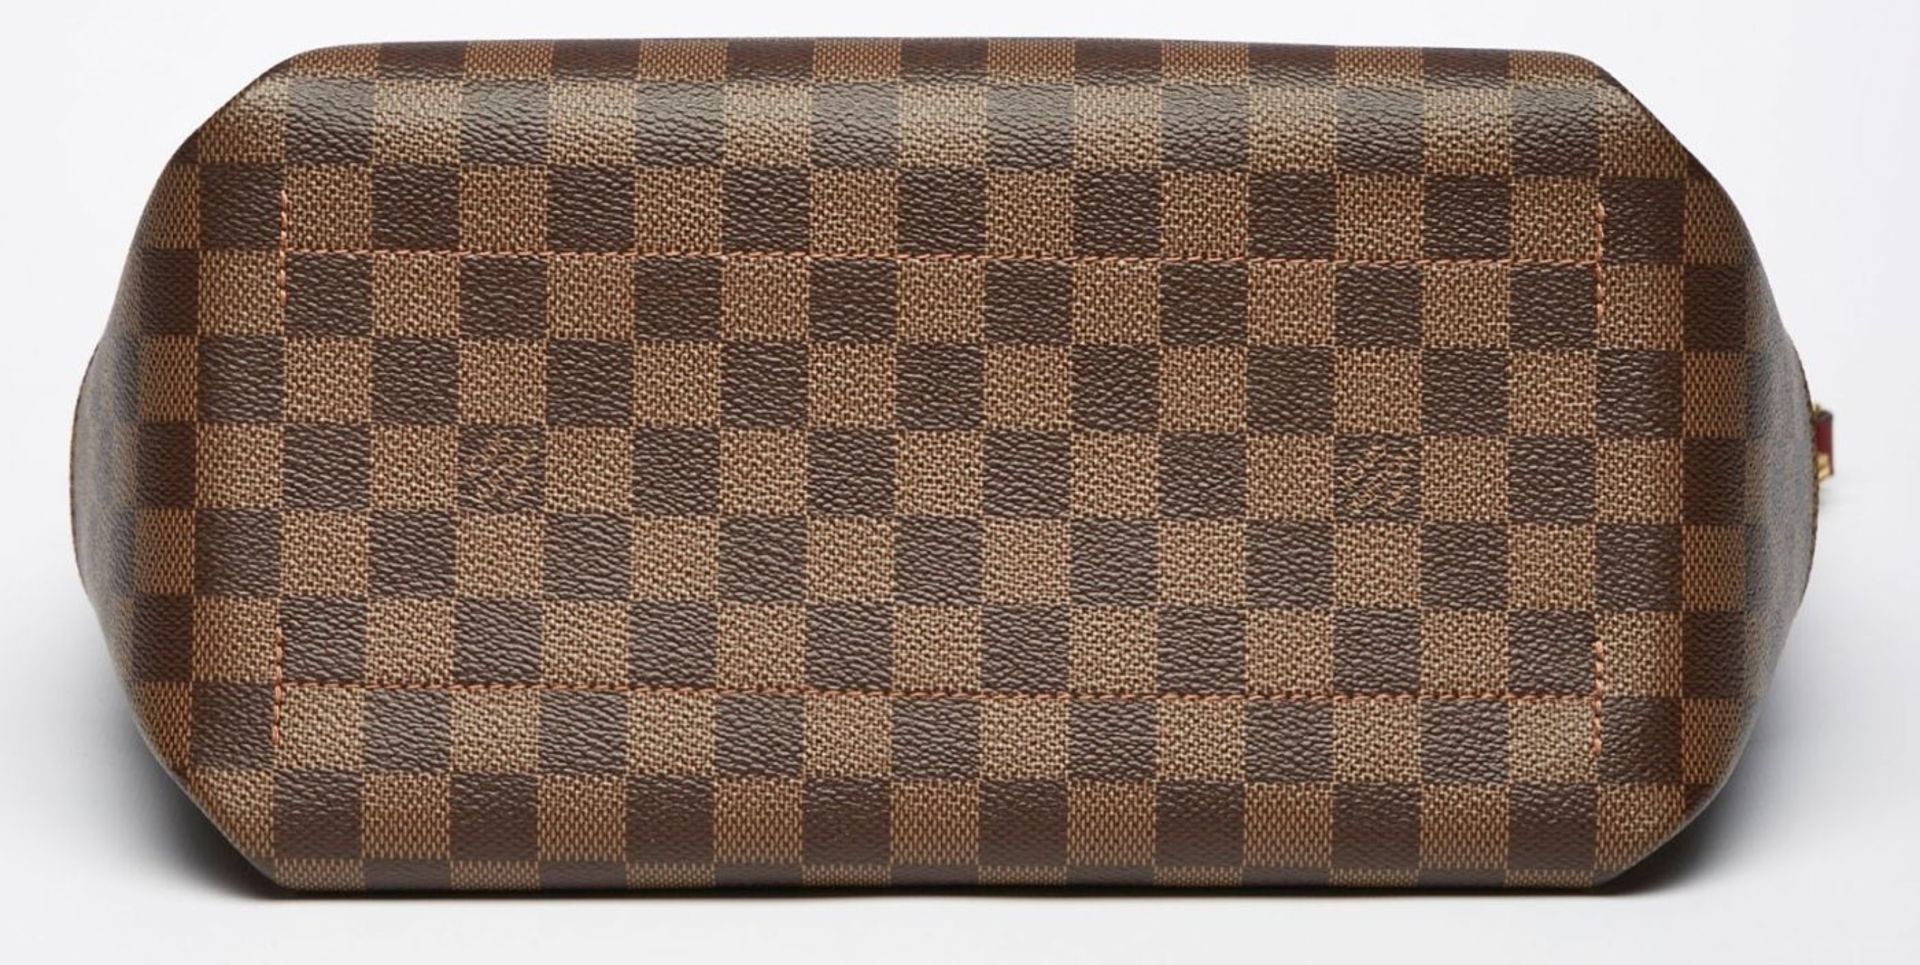 Tote Bag, Louis Vuitton 2019. - Image 3 of 3